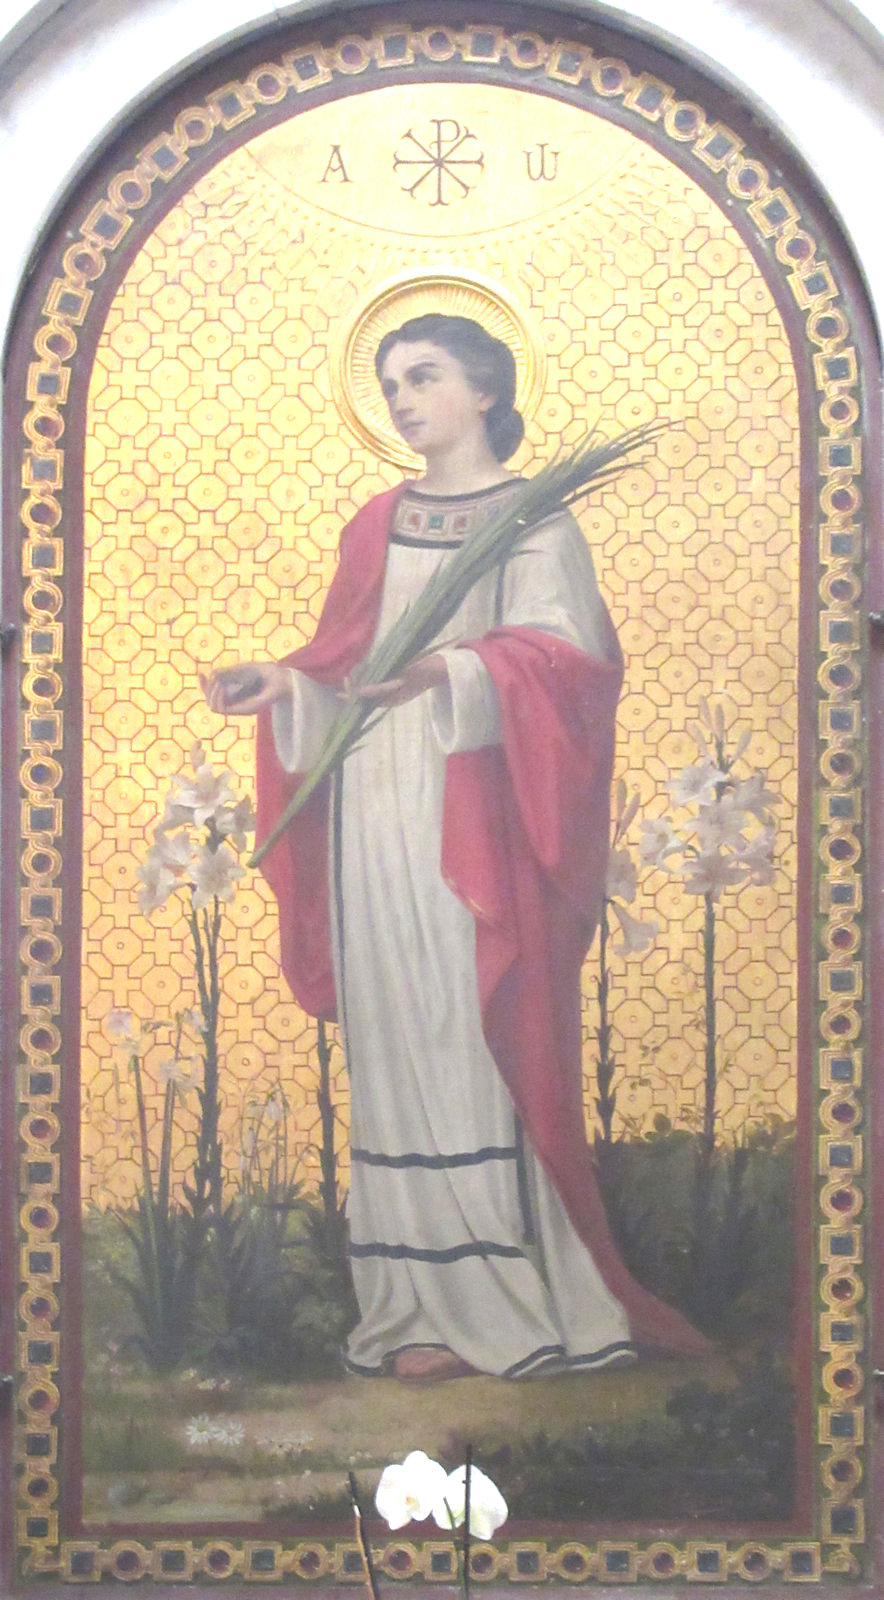 Altarbild in der Kirche Sant'Agnese fuori le mura in Rom